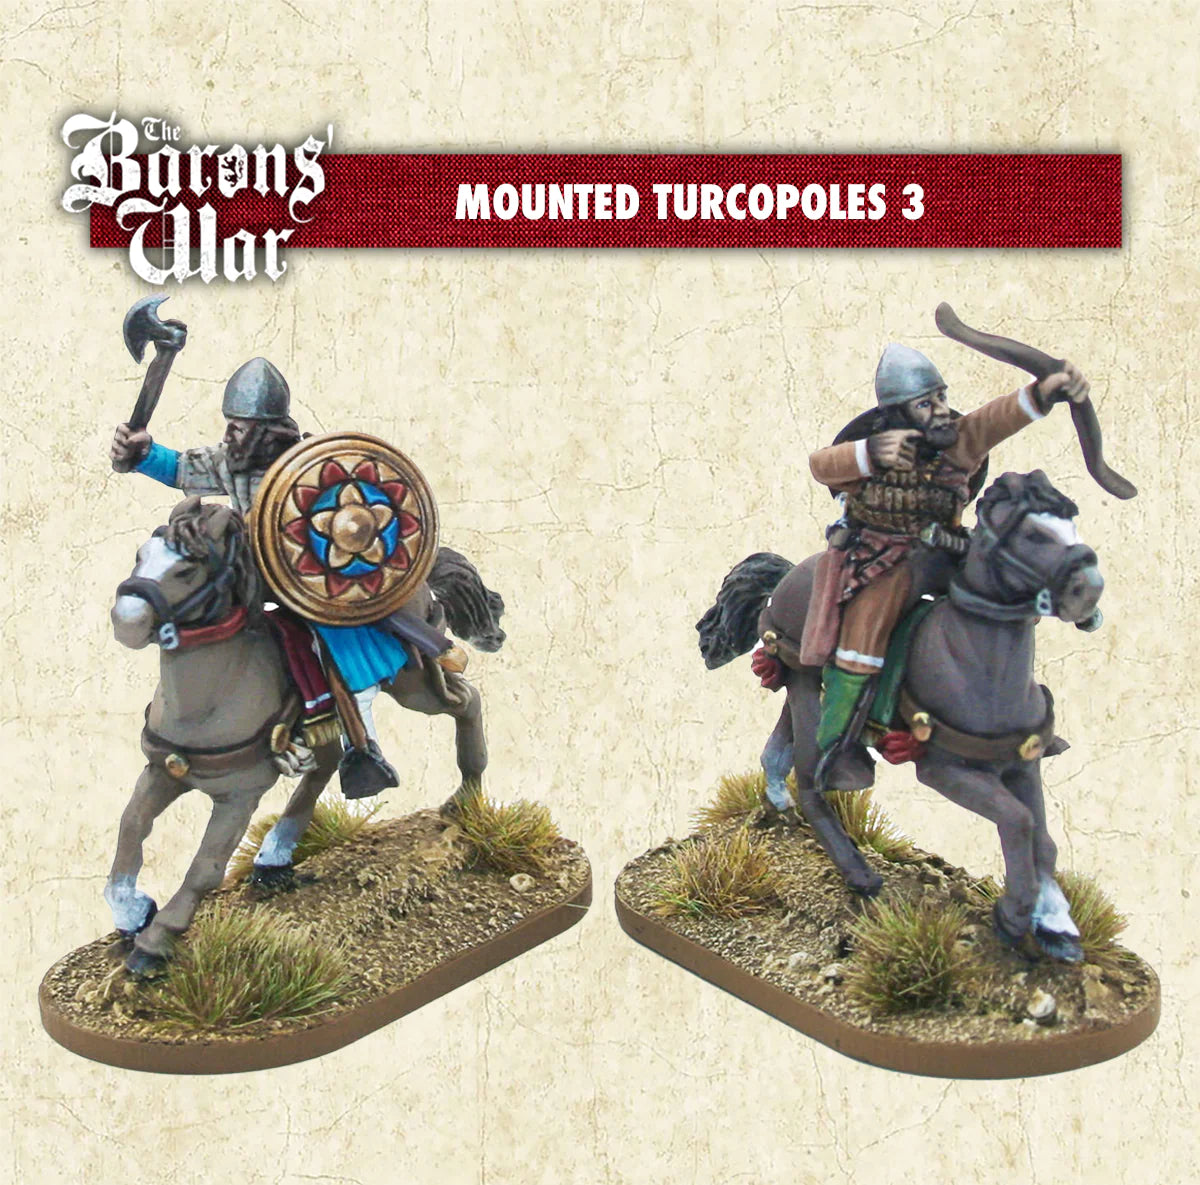 Mounted Turcopoles 3: Barons War Outremer